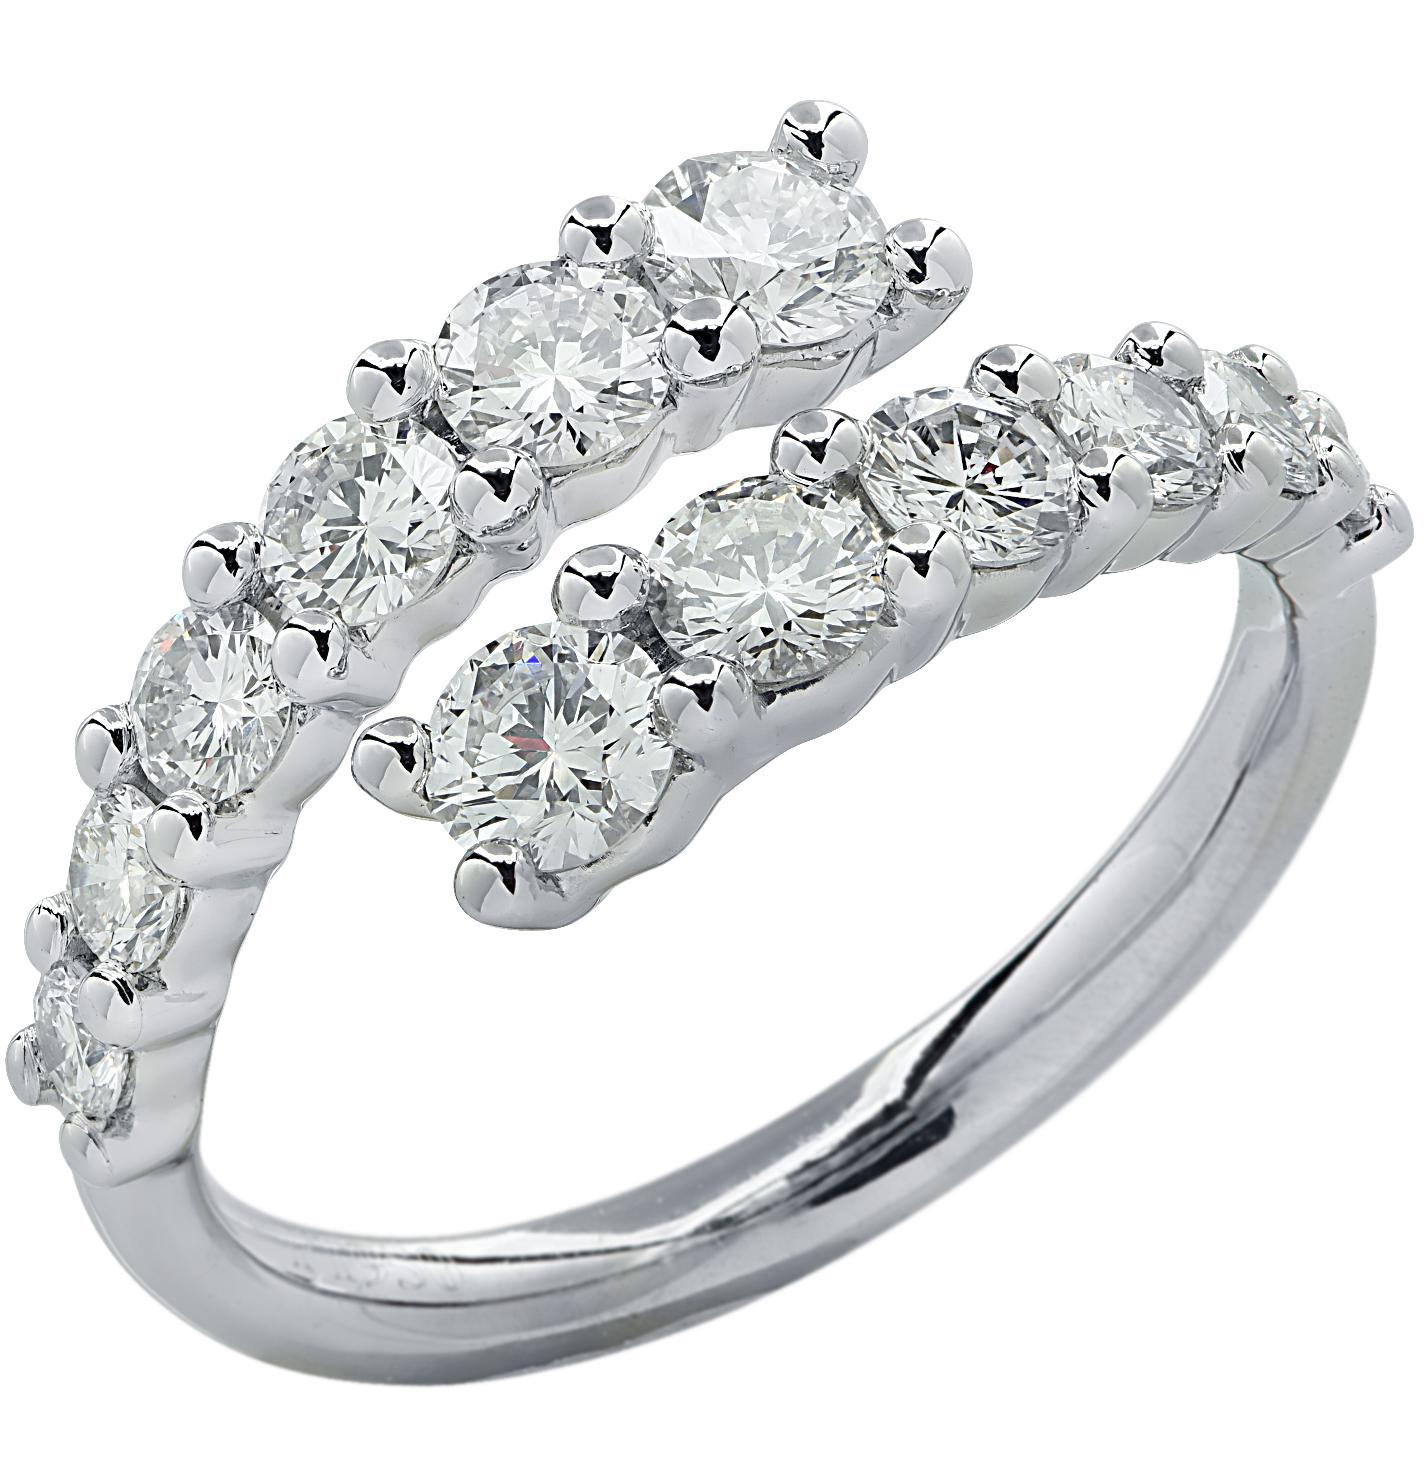 Vivid Diamonds 1.31 Carat Diamond Bypass Ring In New Condition For Sale In Miami, FL